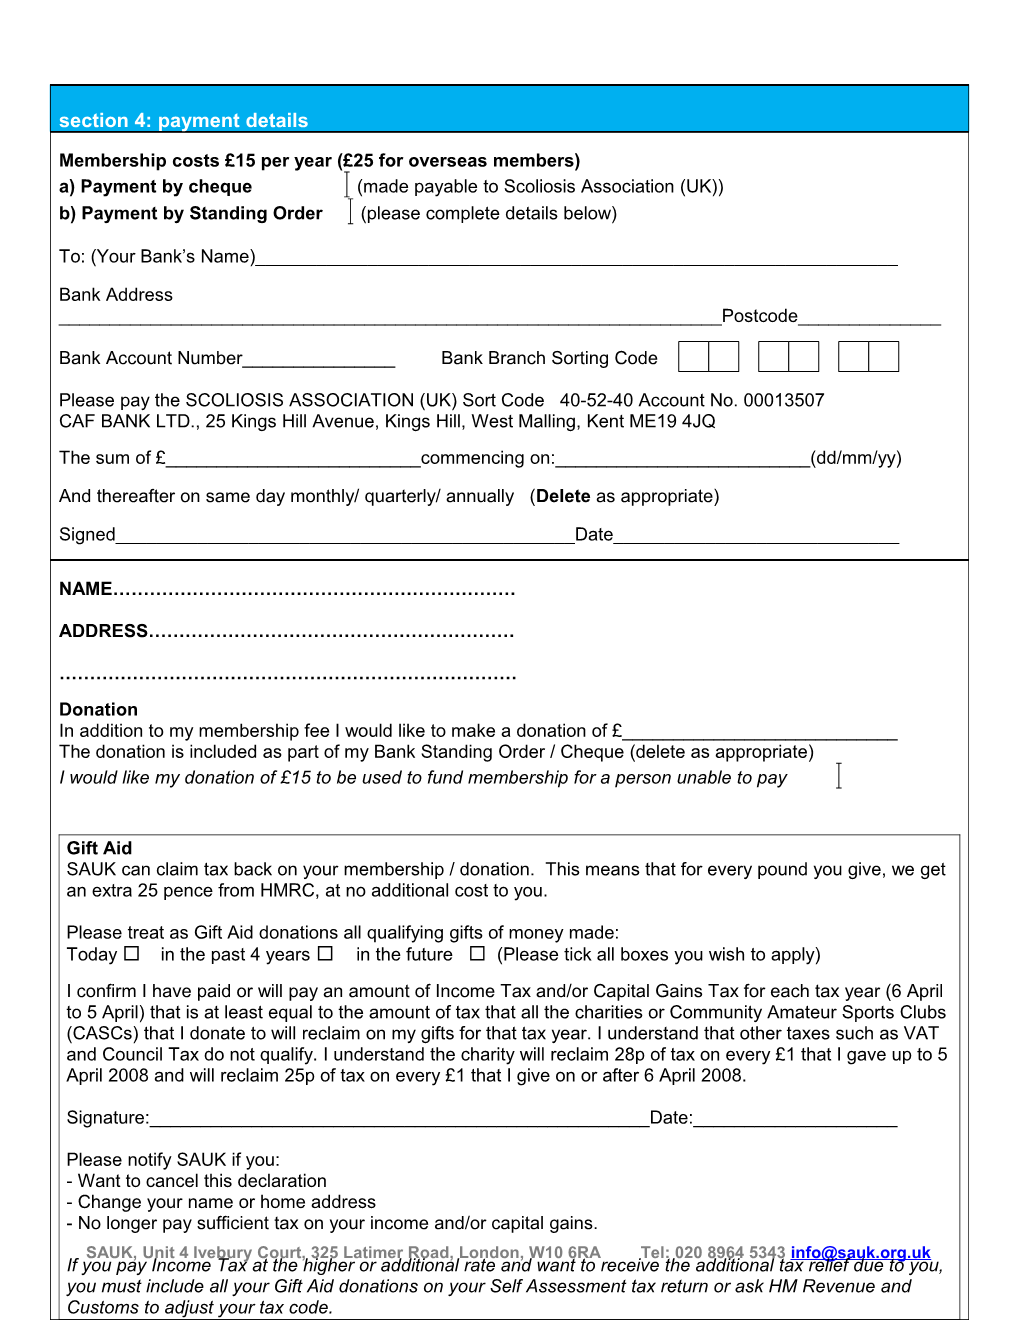 To Renew Your SAUK Membership, Simply Complete This Form and Return to SAUK, 4 Ivebury Court